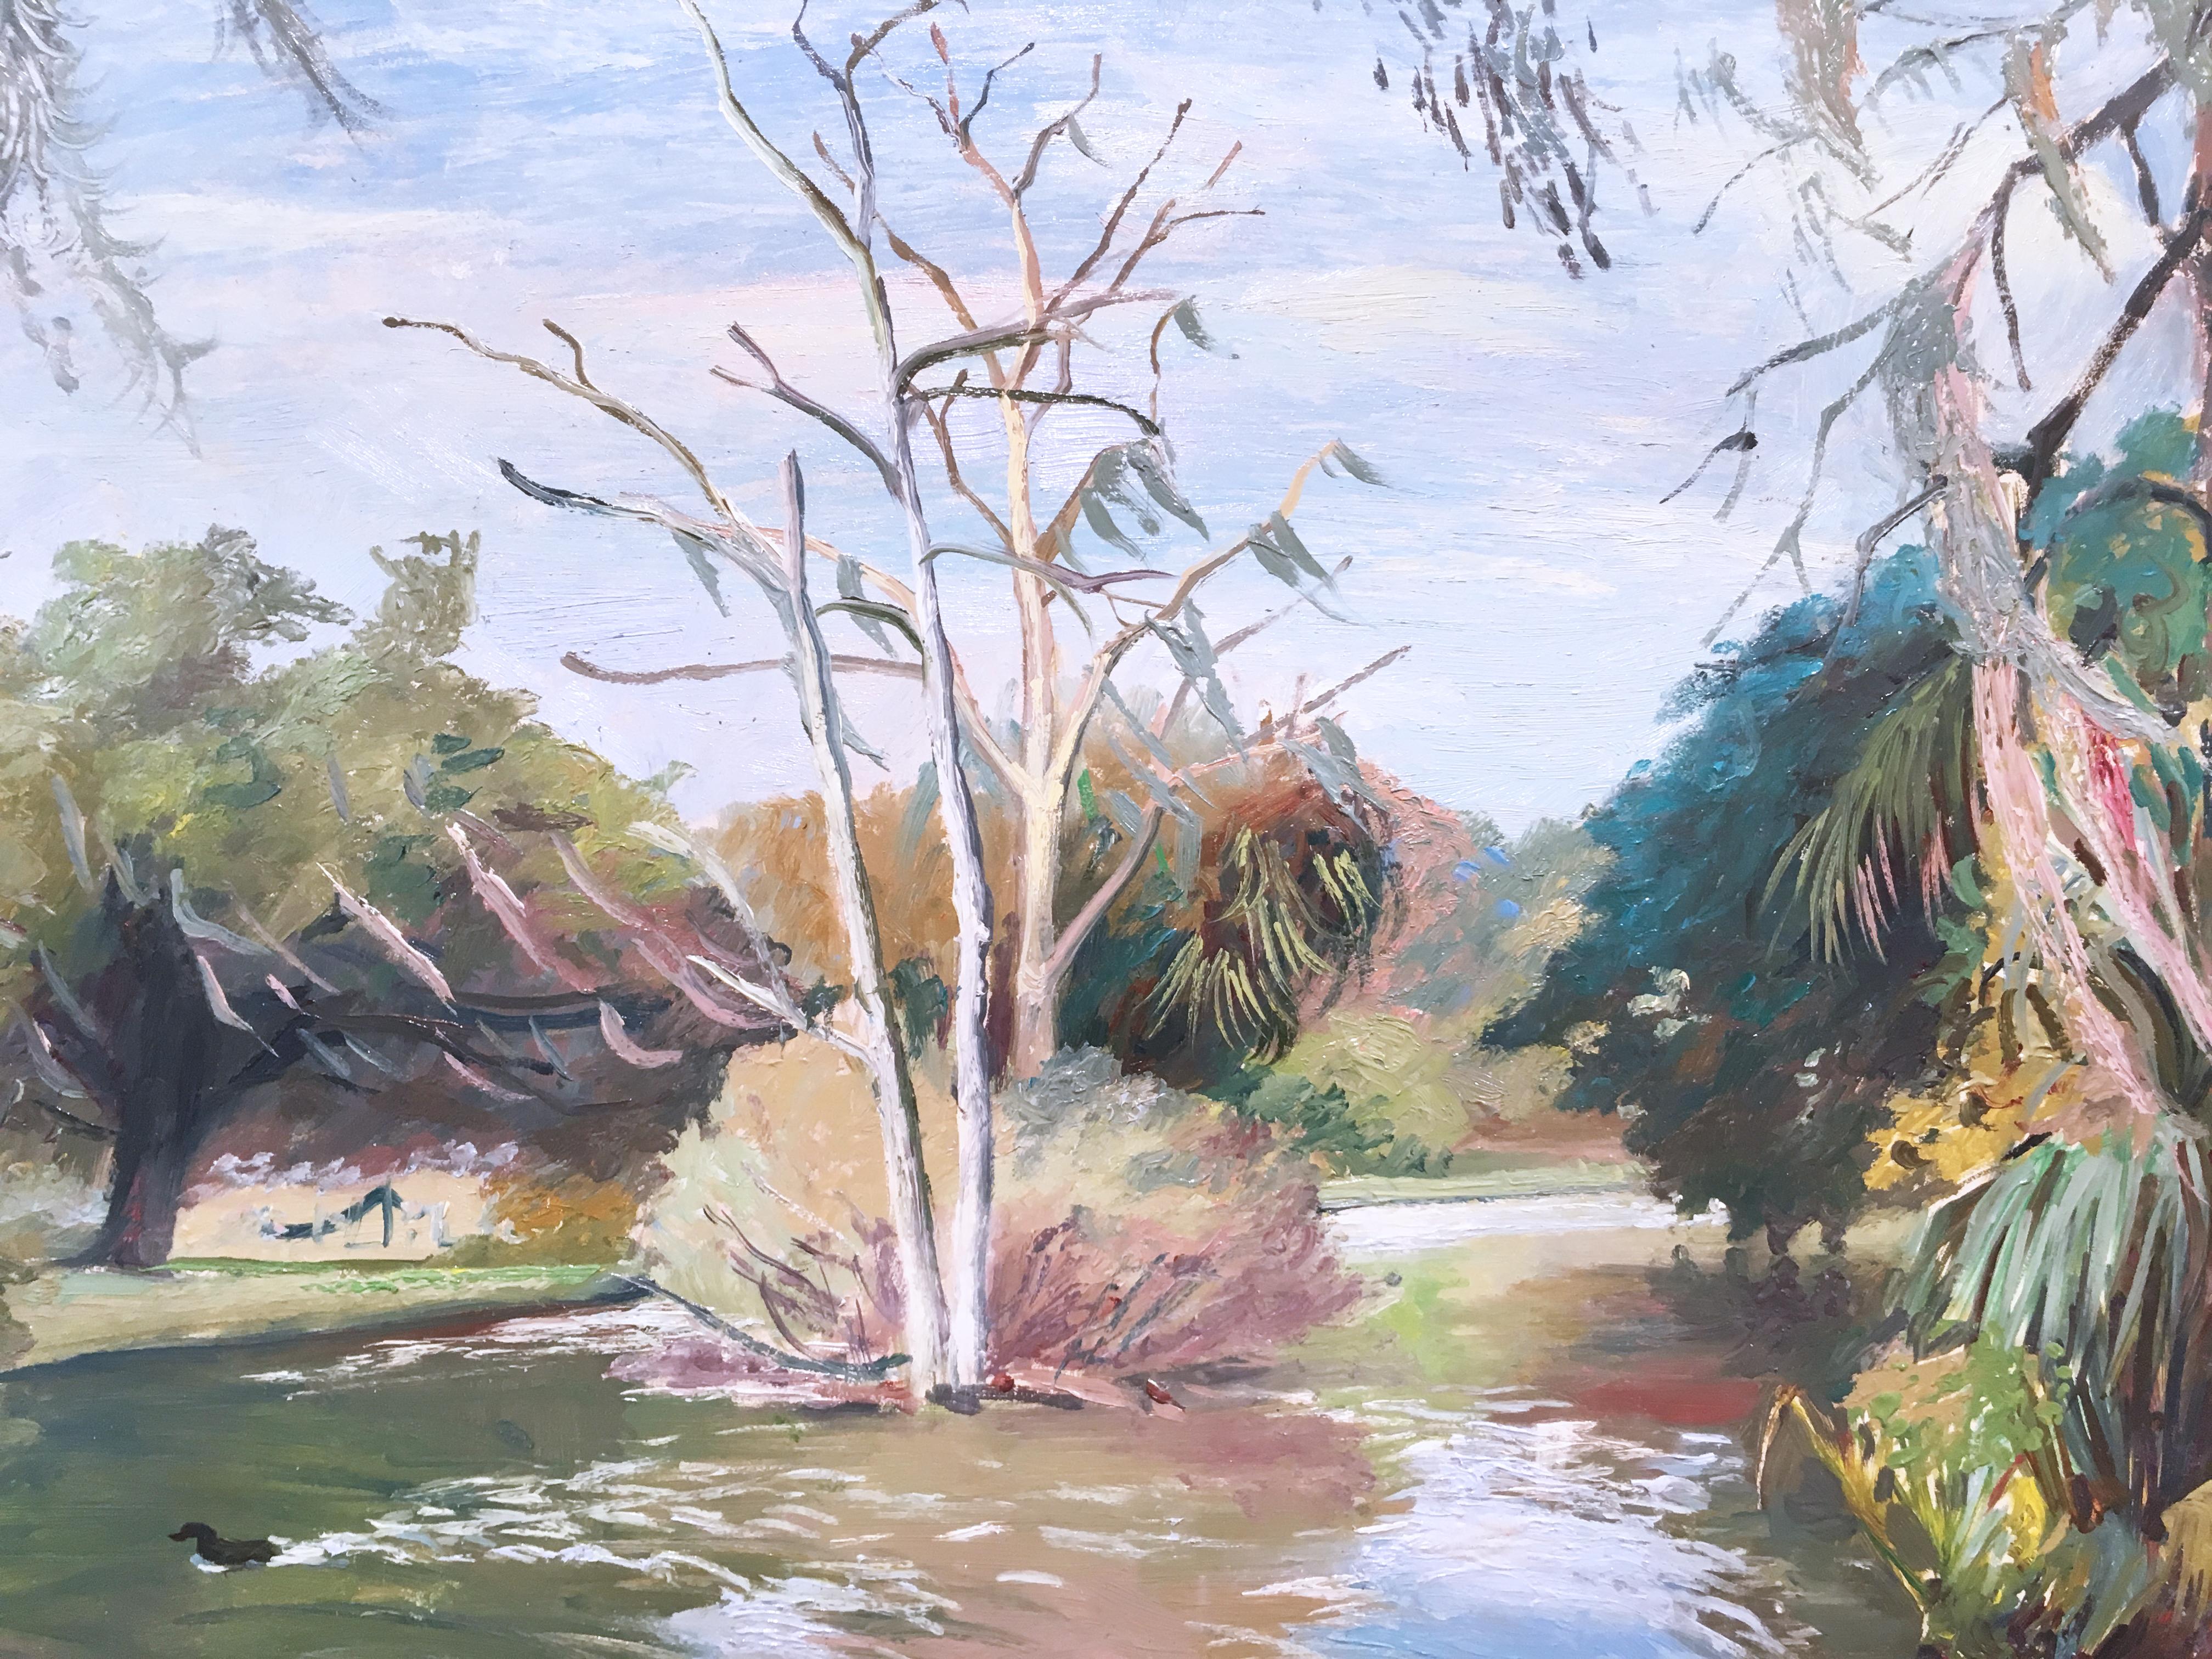 NOLA Swamp, plein air figurative, landscape, oil on panel, 2016 1